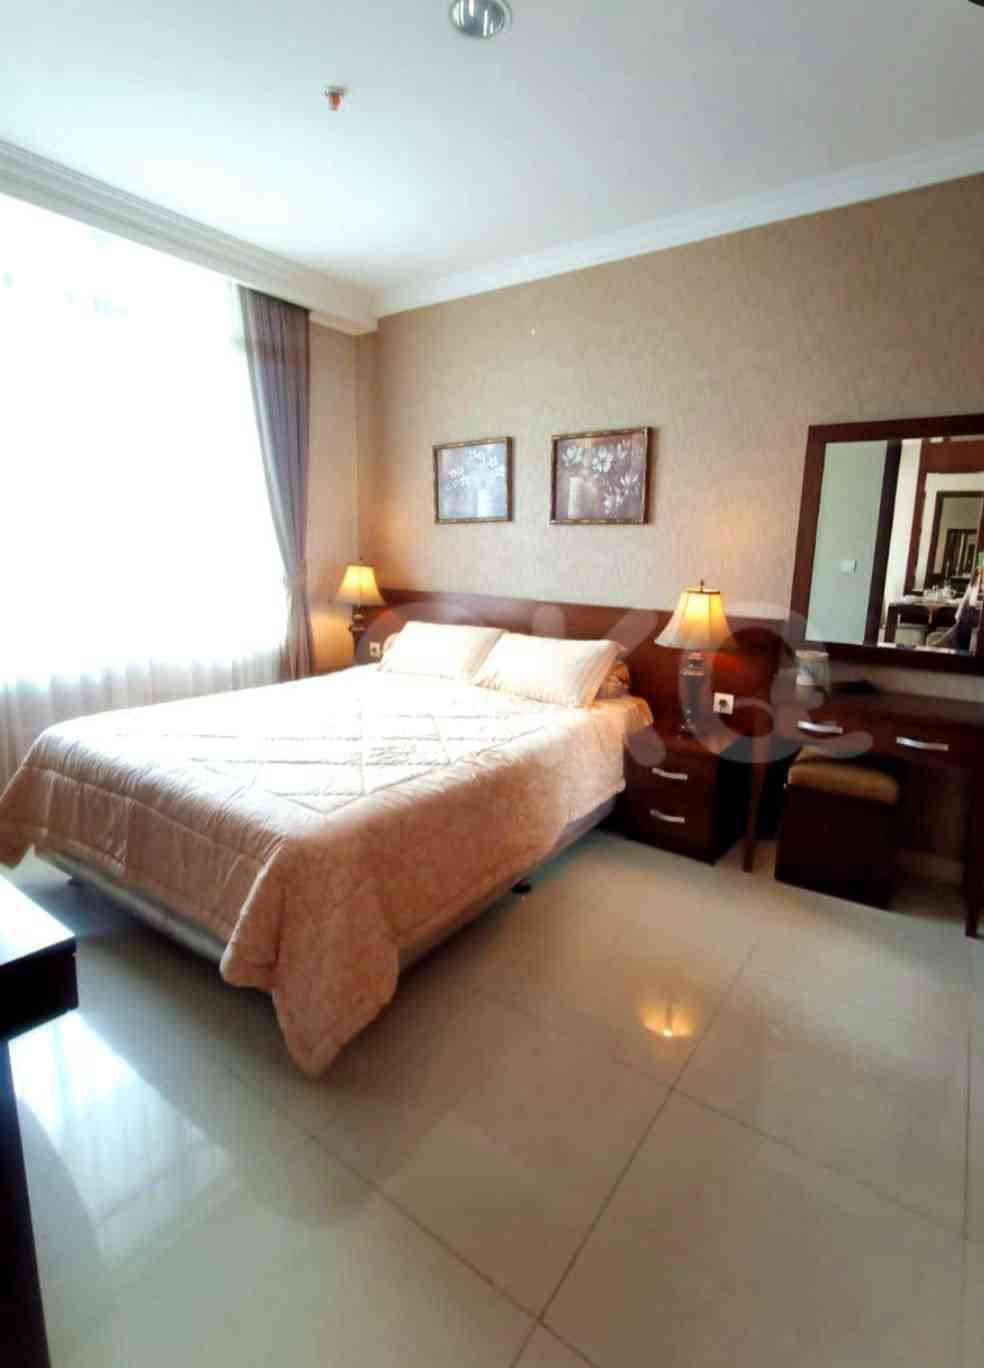 Tipe 1 Kamar Tidur di Lantai 11 untuk disewakan di Kuningan City (Denpasar Residence) - fku7c6 1